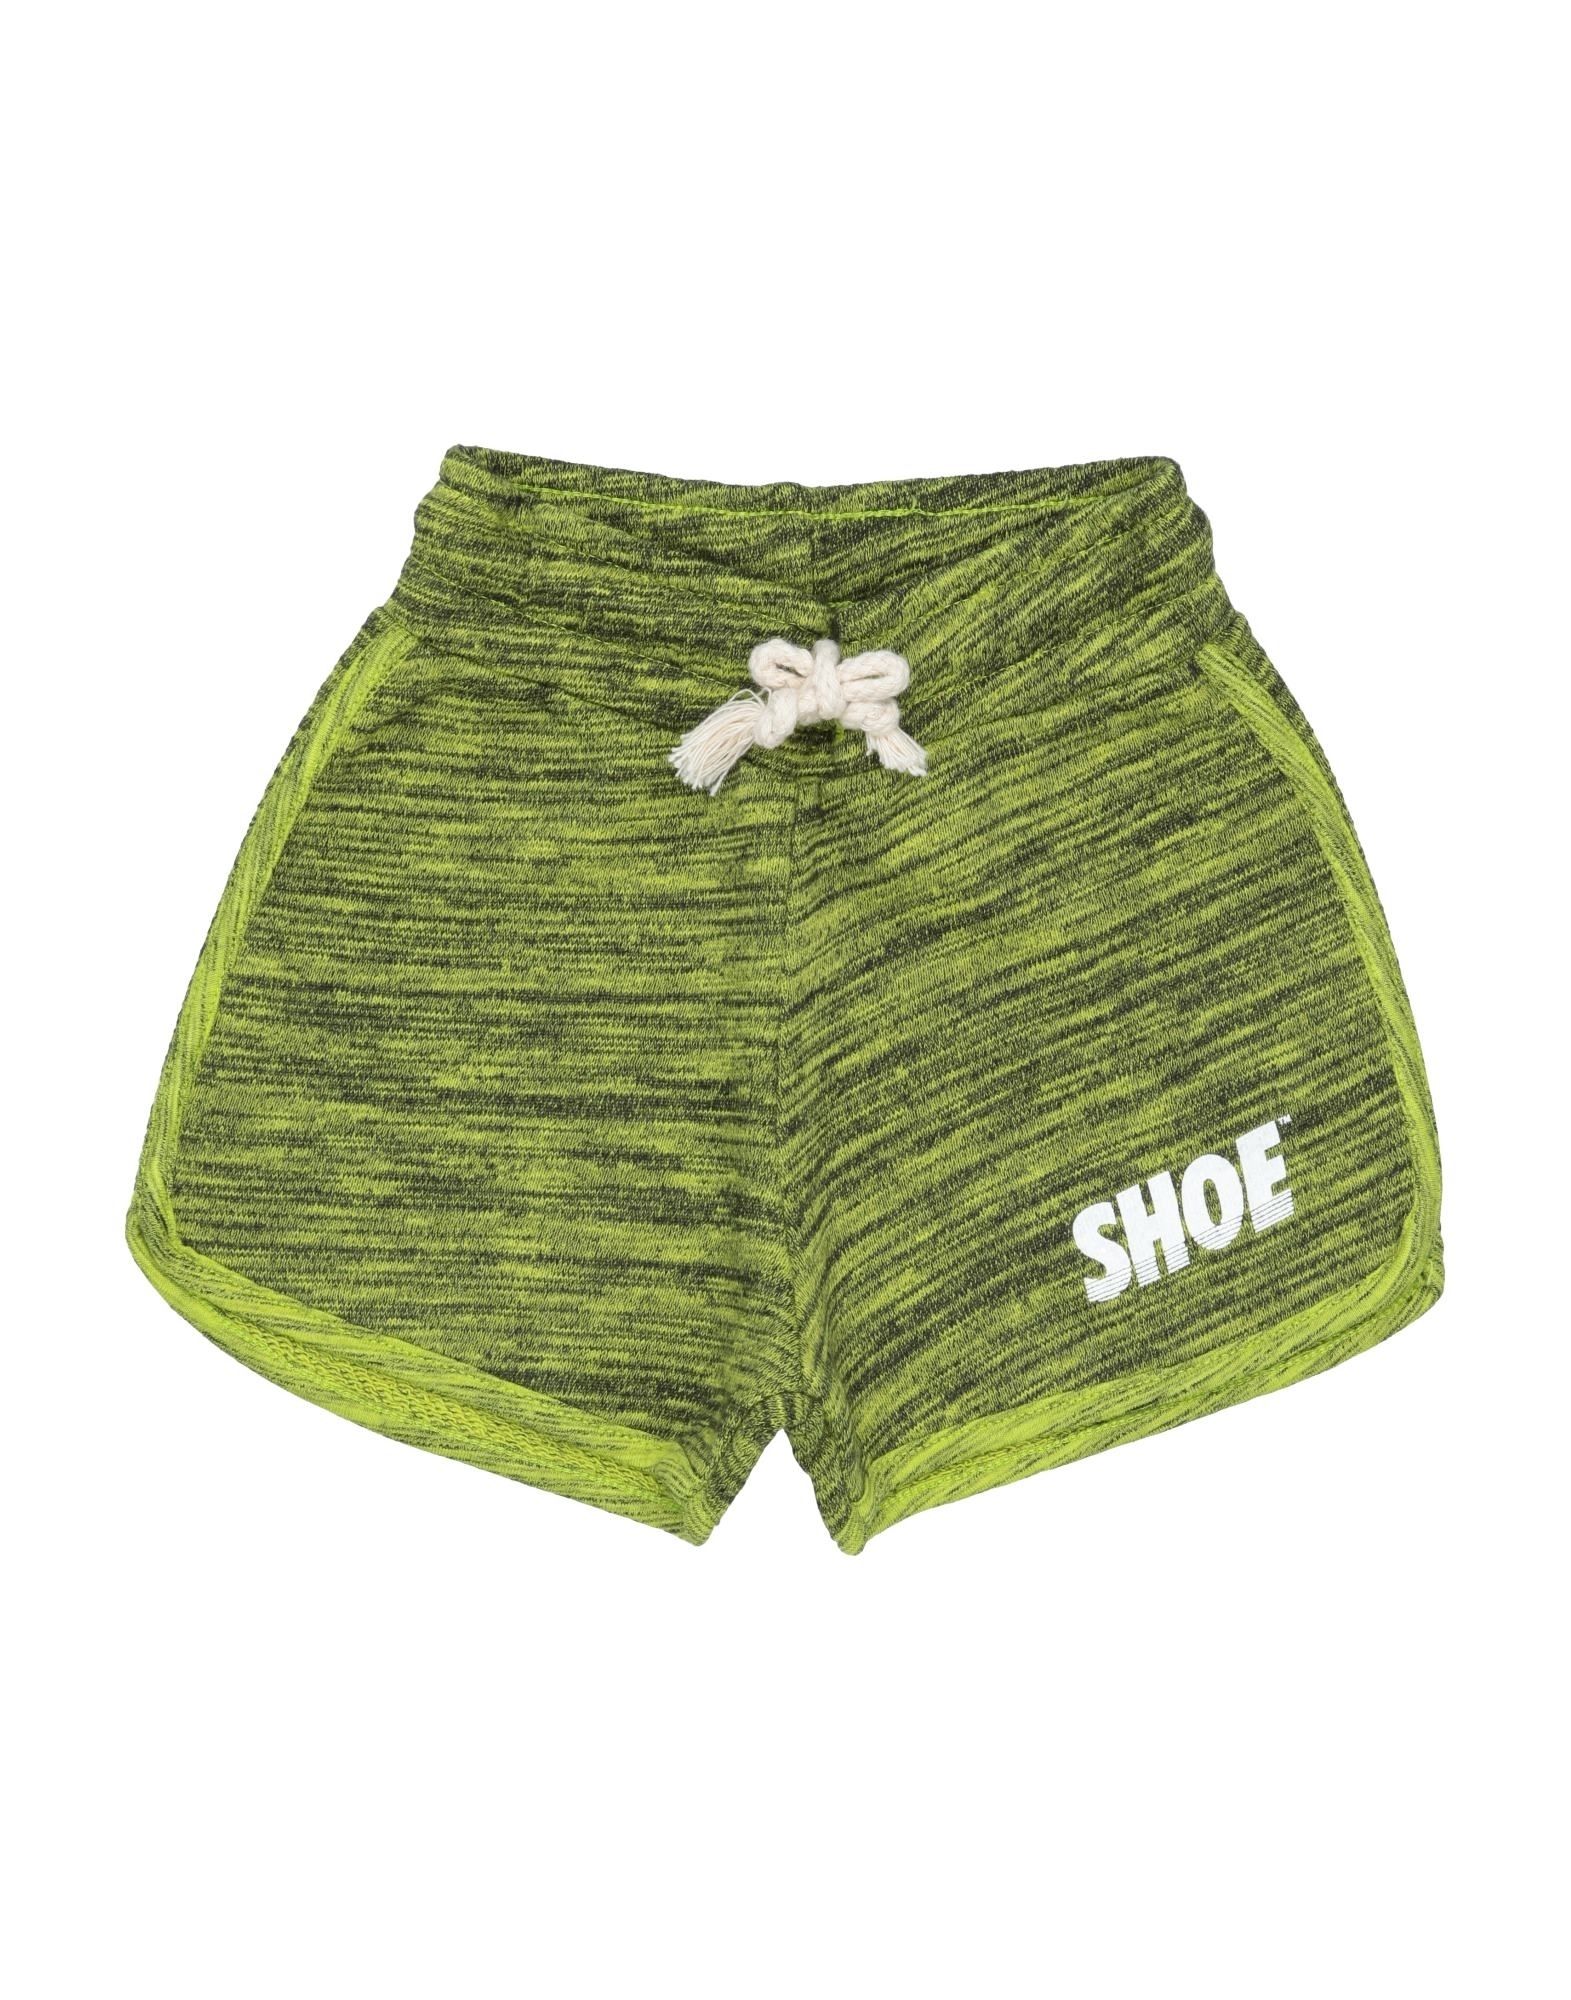 Shoeshine Kids' Shorts In Acid Green